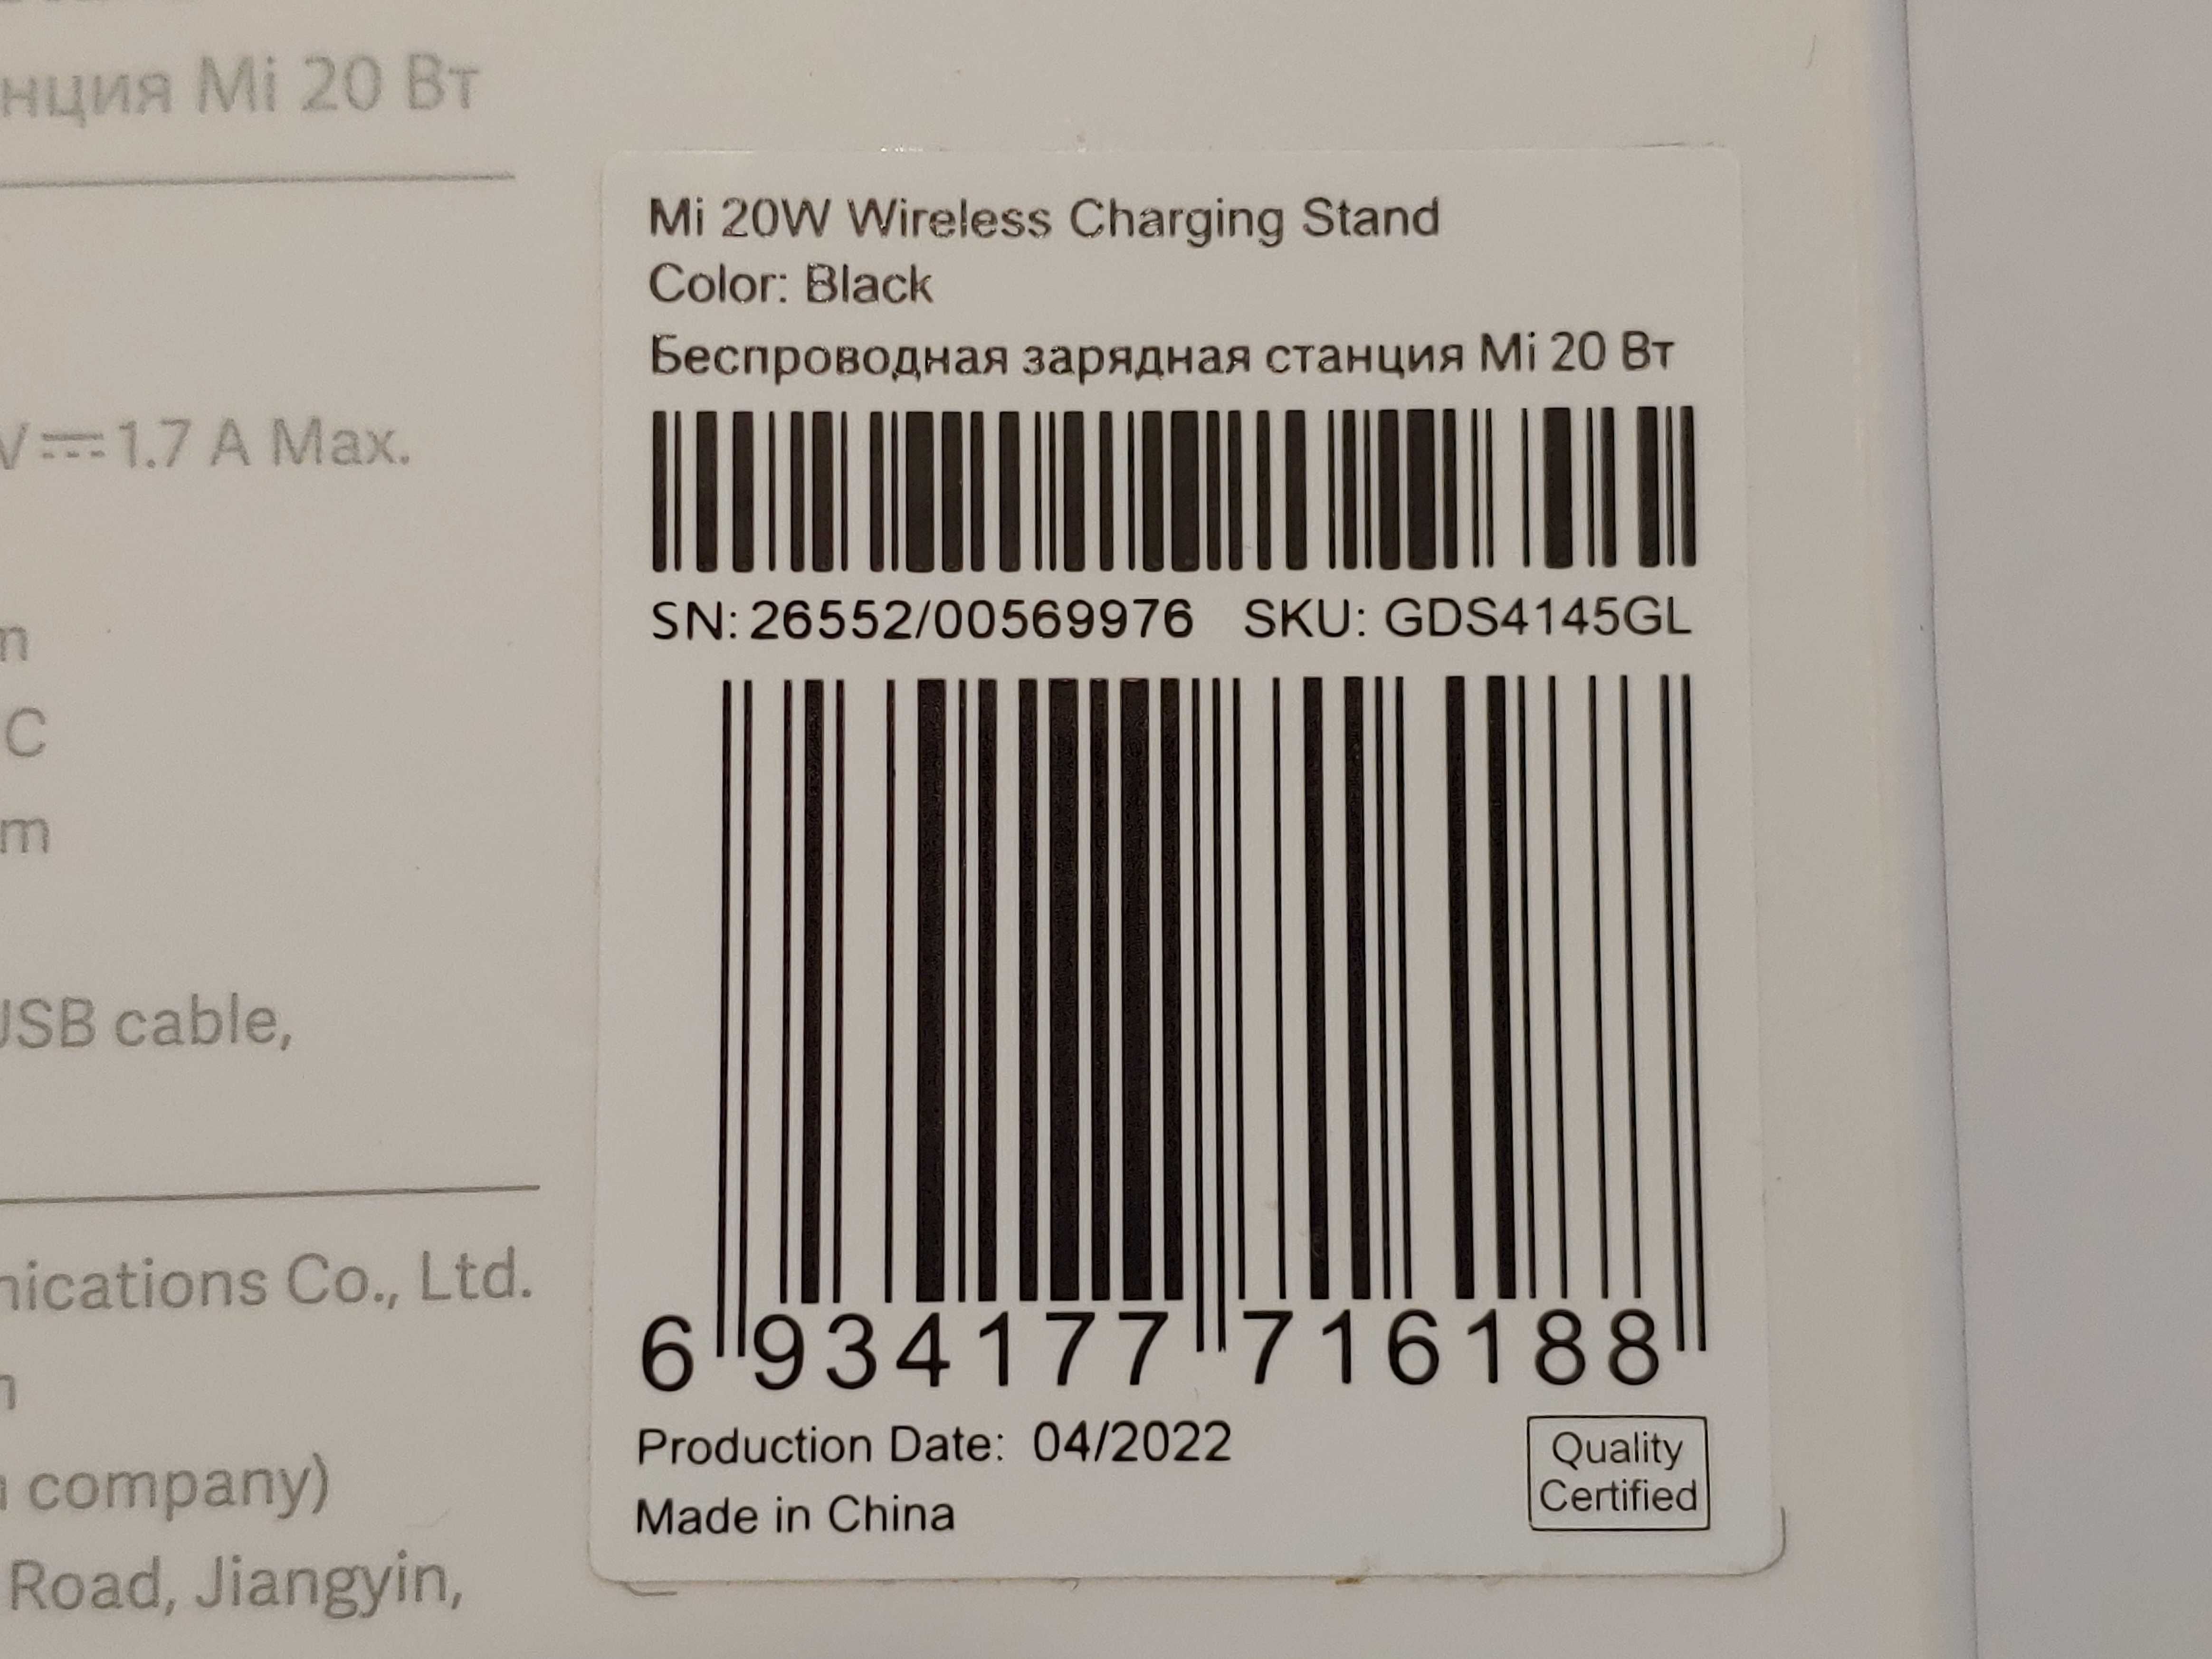 Продам беспроводоную зарядку Xiaomi Mi 20W Wireless Charging Stand